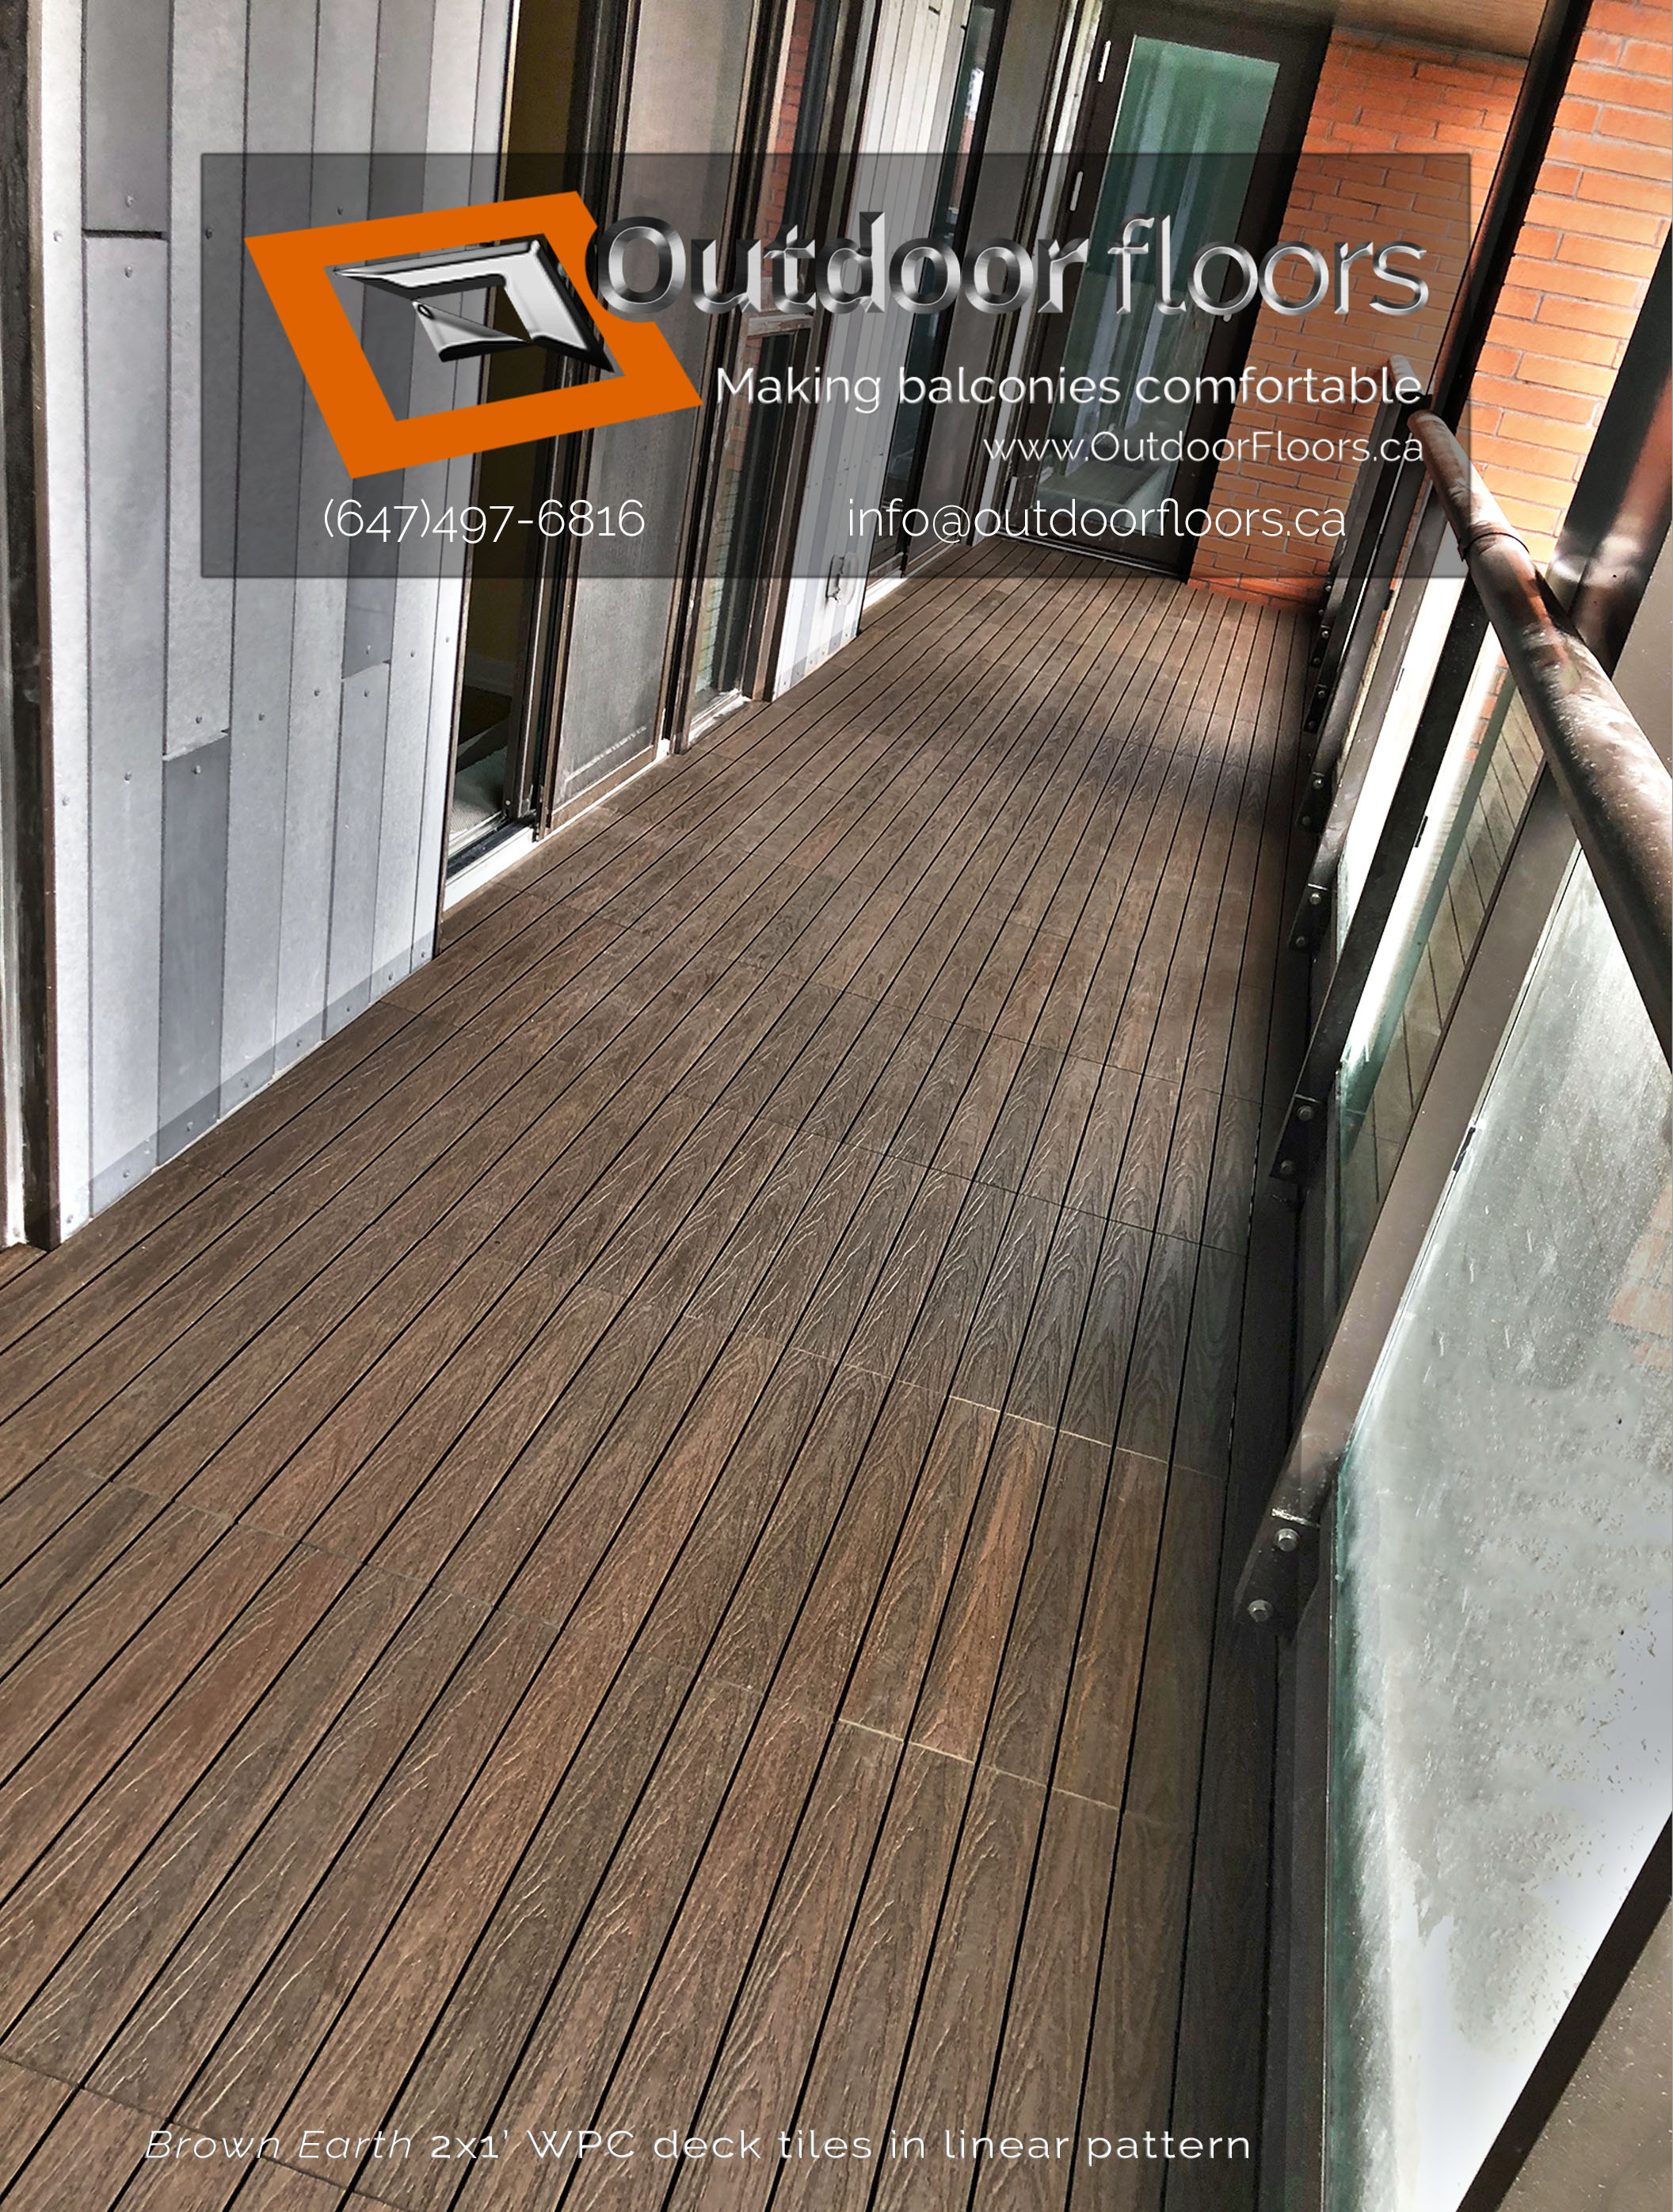 Brown-Earth 2x1 foot deck tiles on Toronto balcony